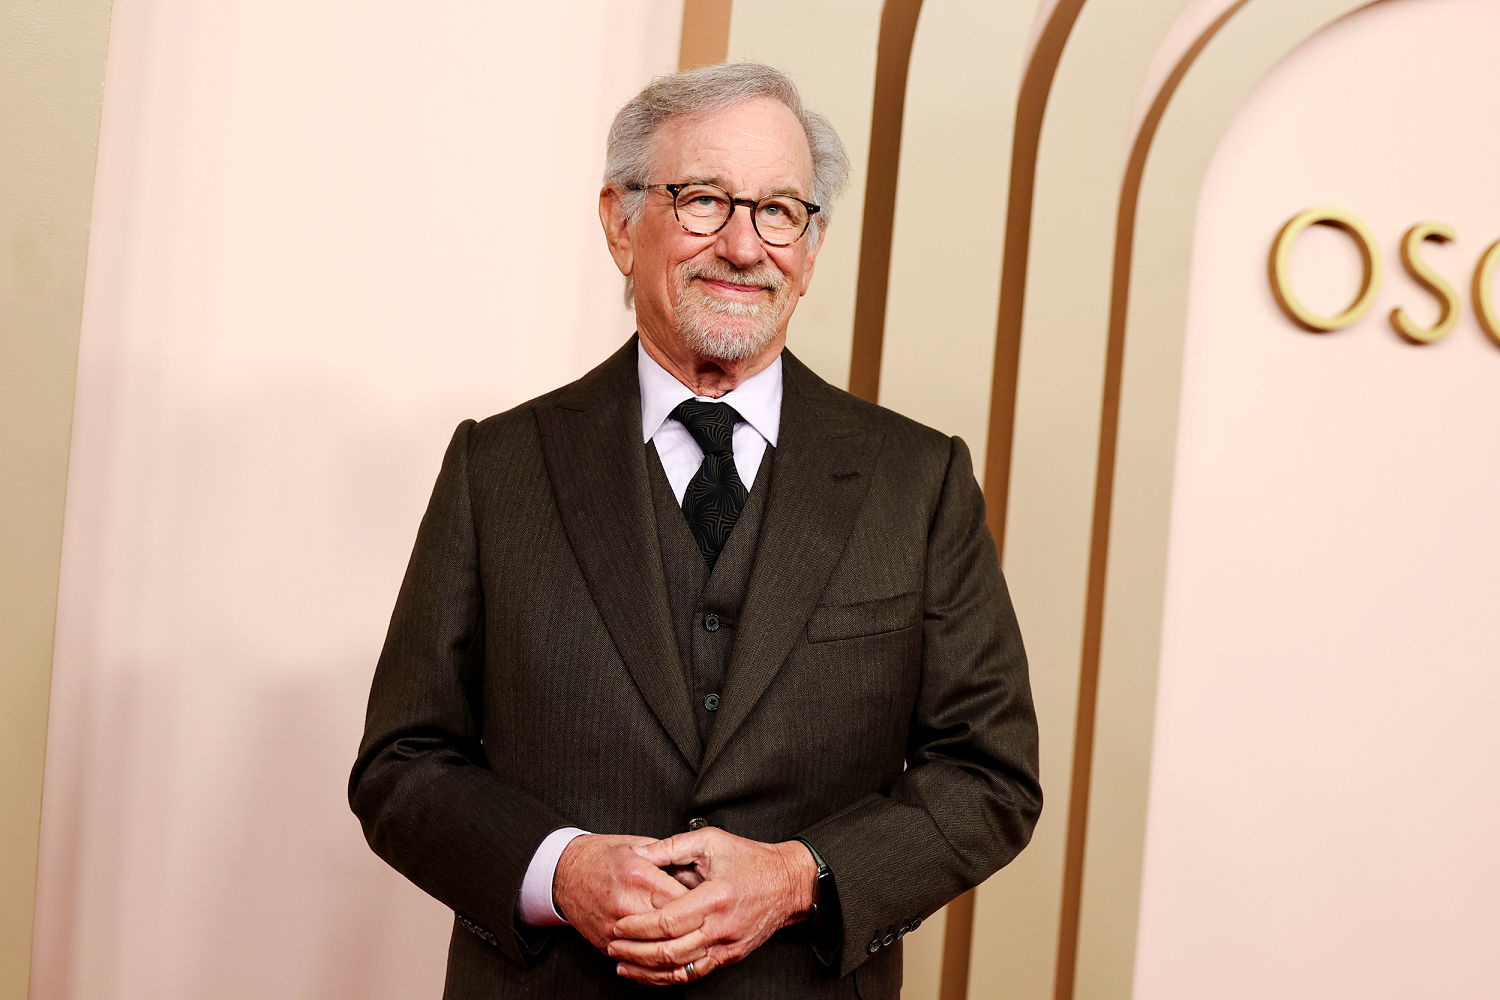 Steven Spielberg's latest project: Providing strategy for the Biden campaign